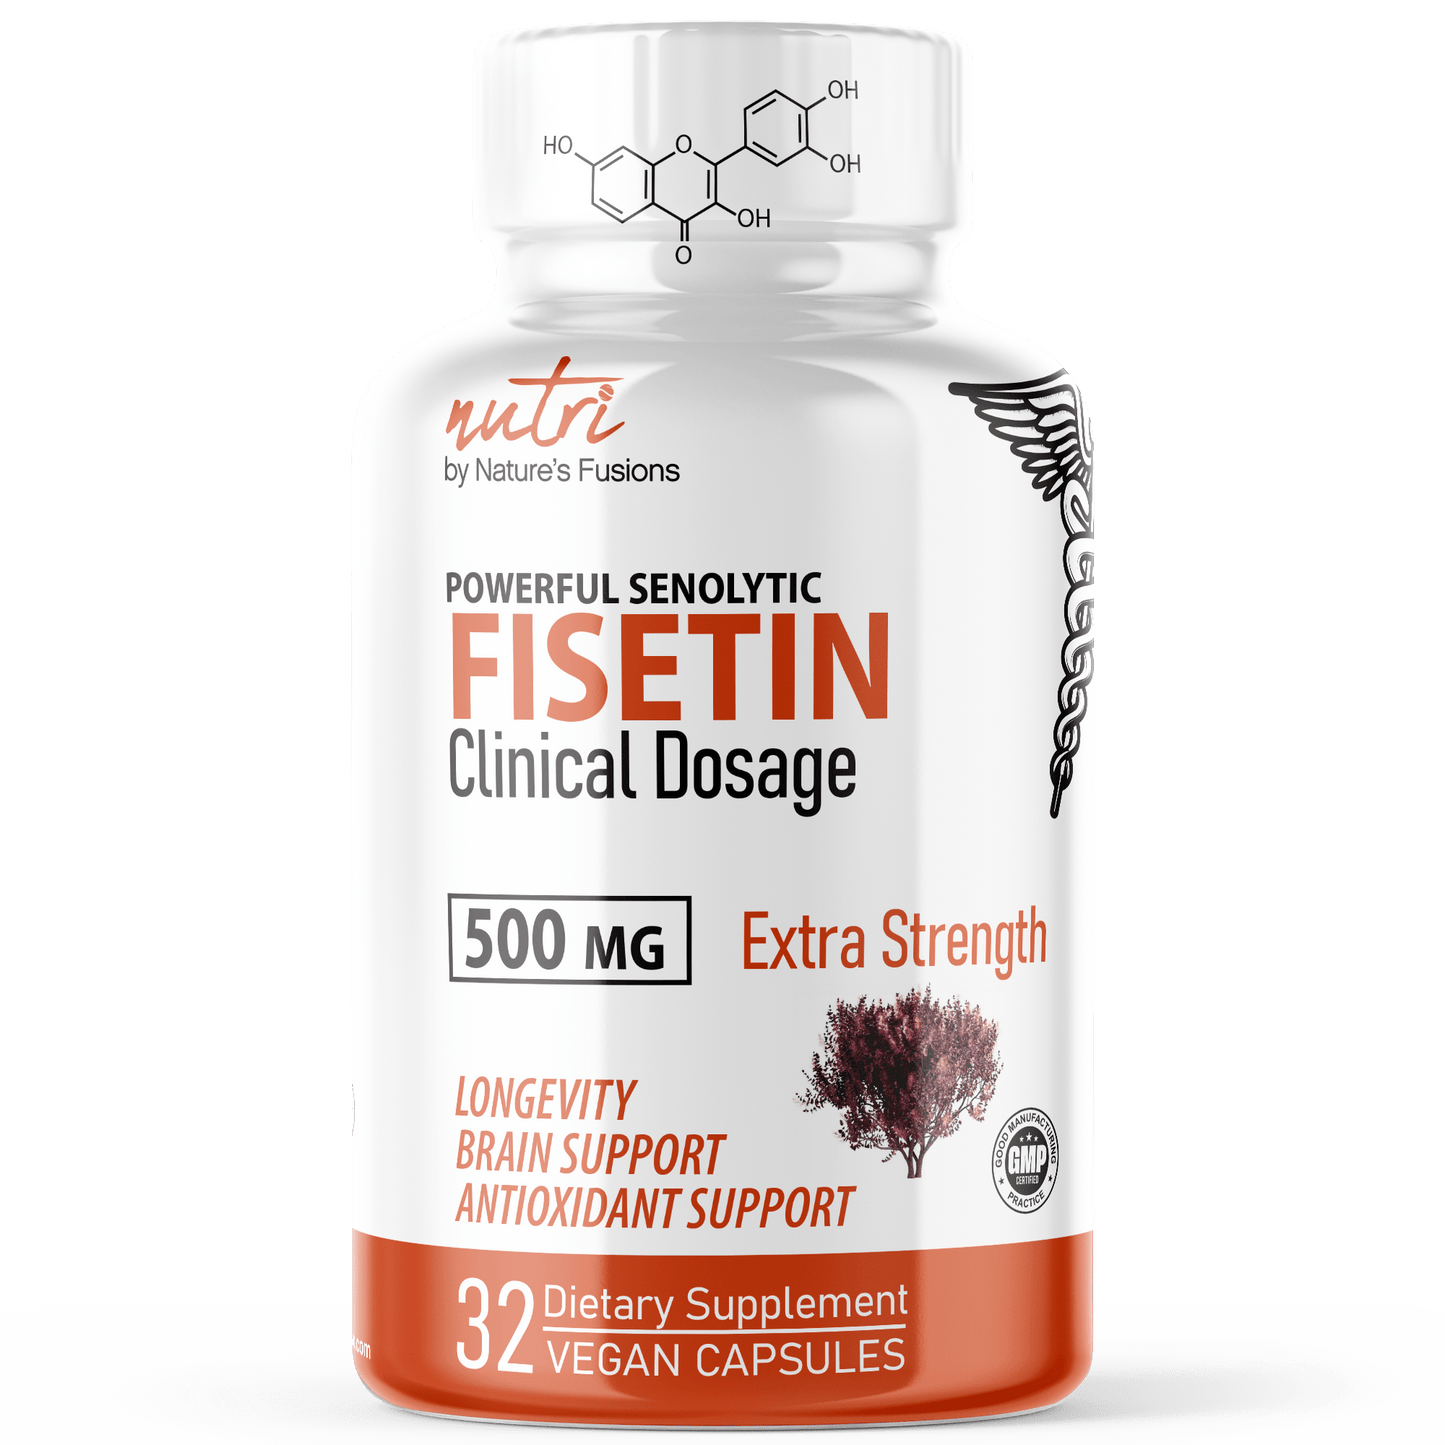 Nutri SenoFi - Fisetin 500mg - Powerful Senolytic Activator, Antioxidant, & Brain Support - Natural Polyphenols - 32 Count - Tree Spirit Wellness